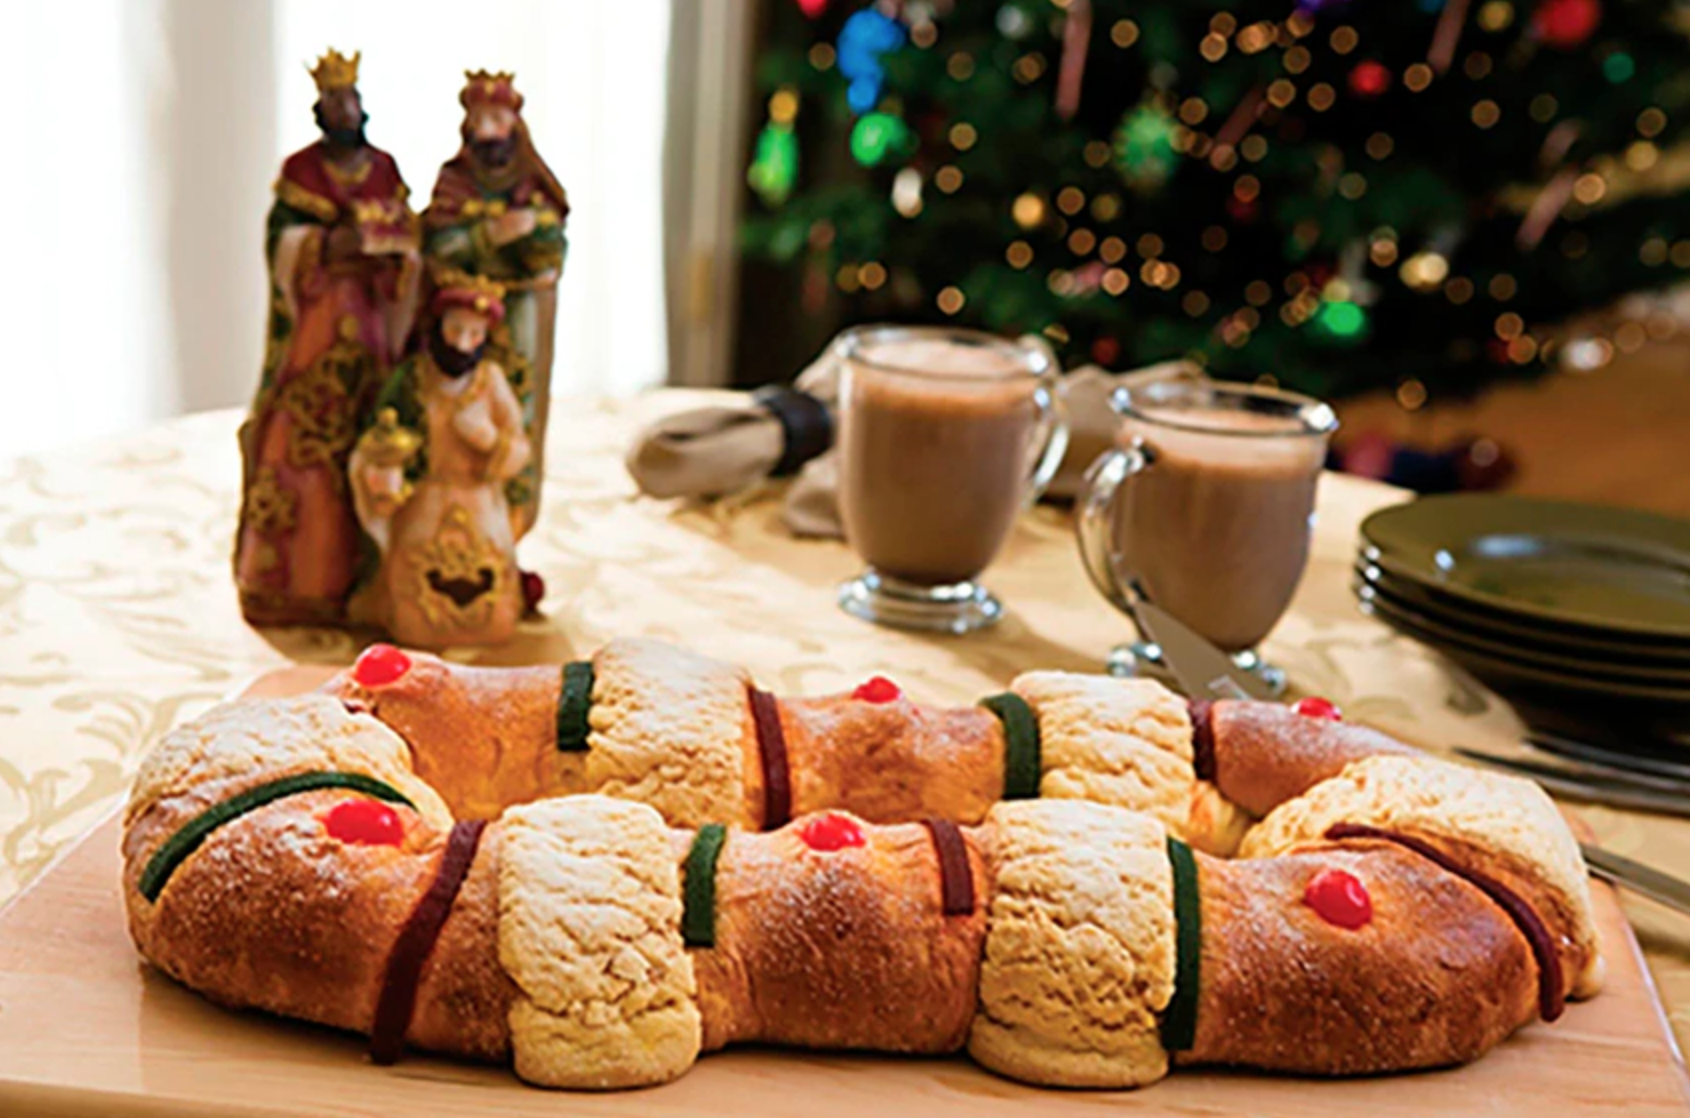 Rosca de Reyes Tradicional